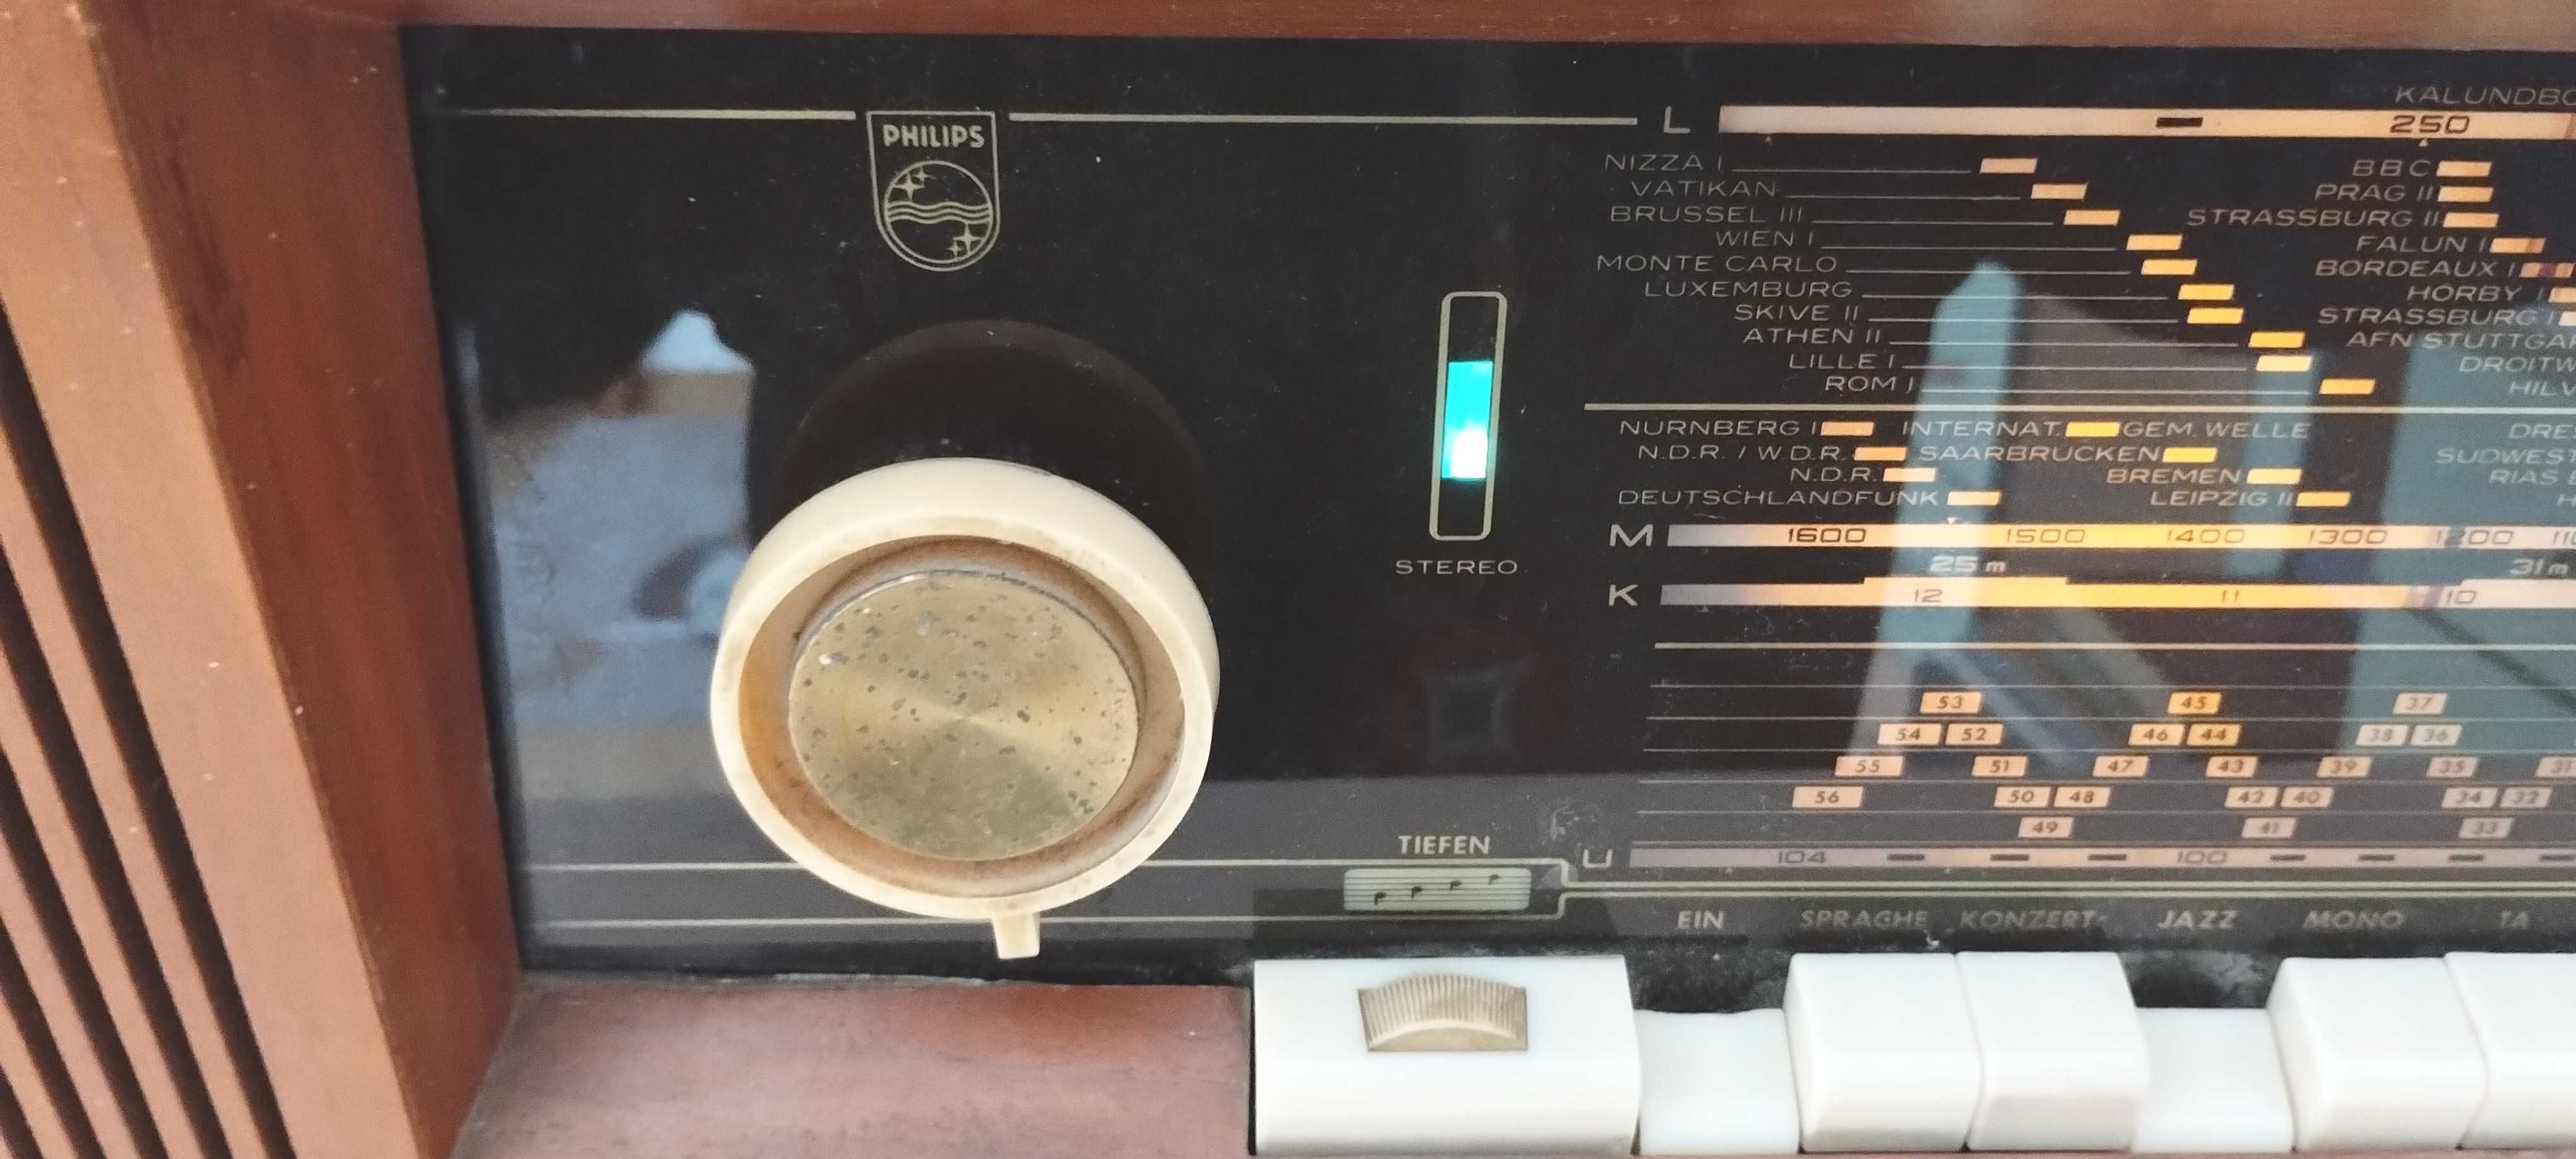 amplituner muzica Philips Saturn 631 stereo pe lampi tuburi